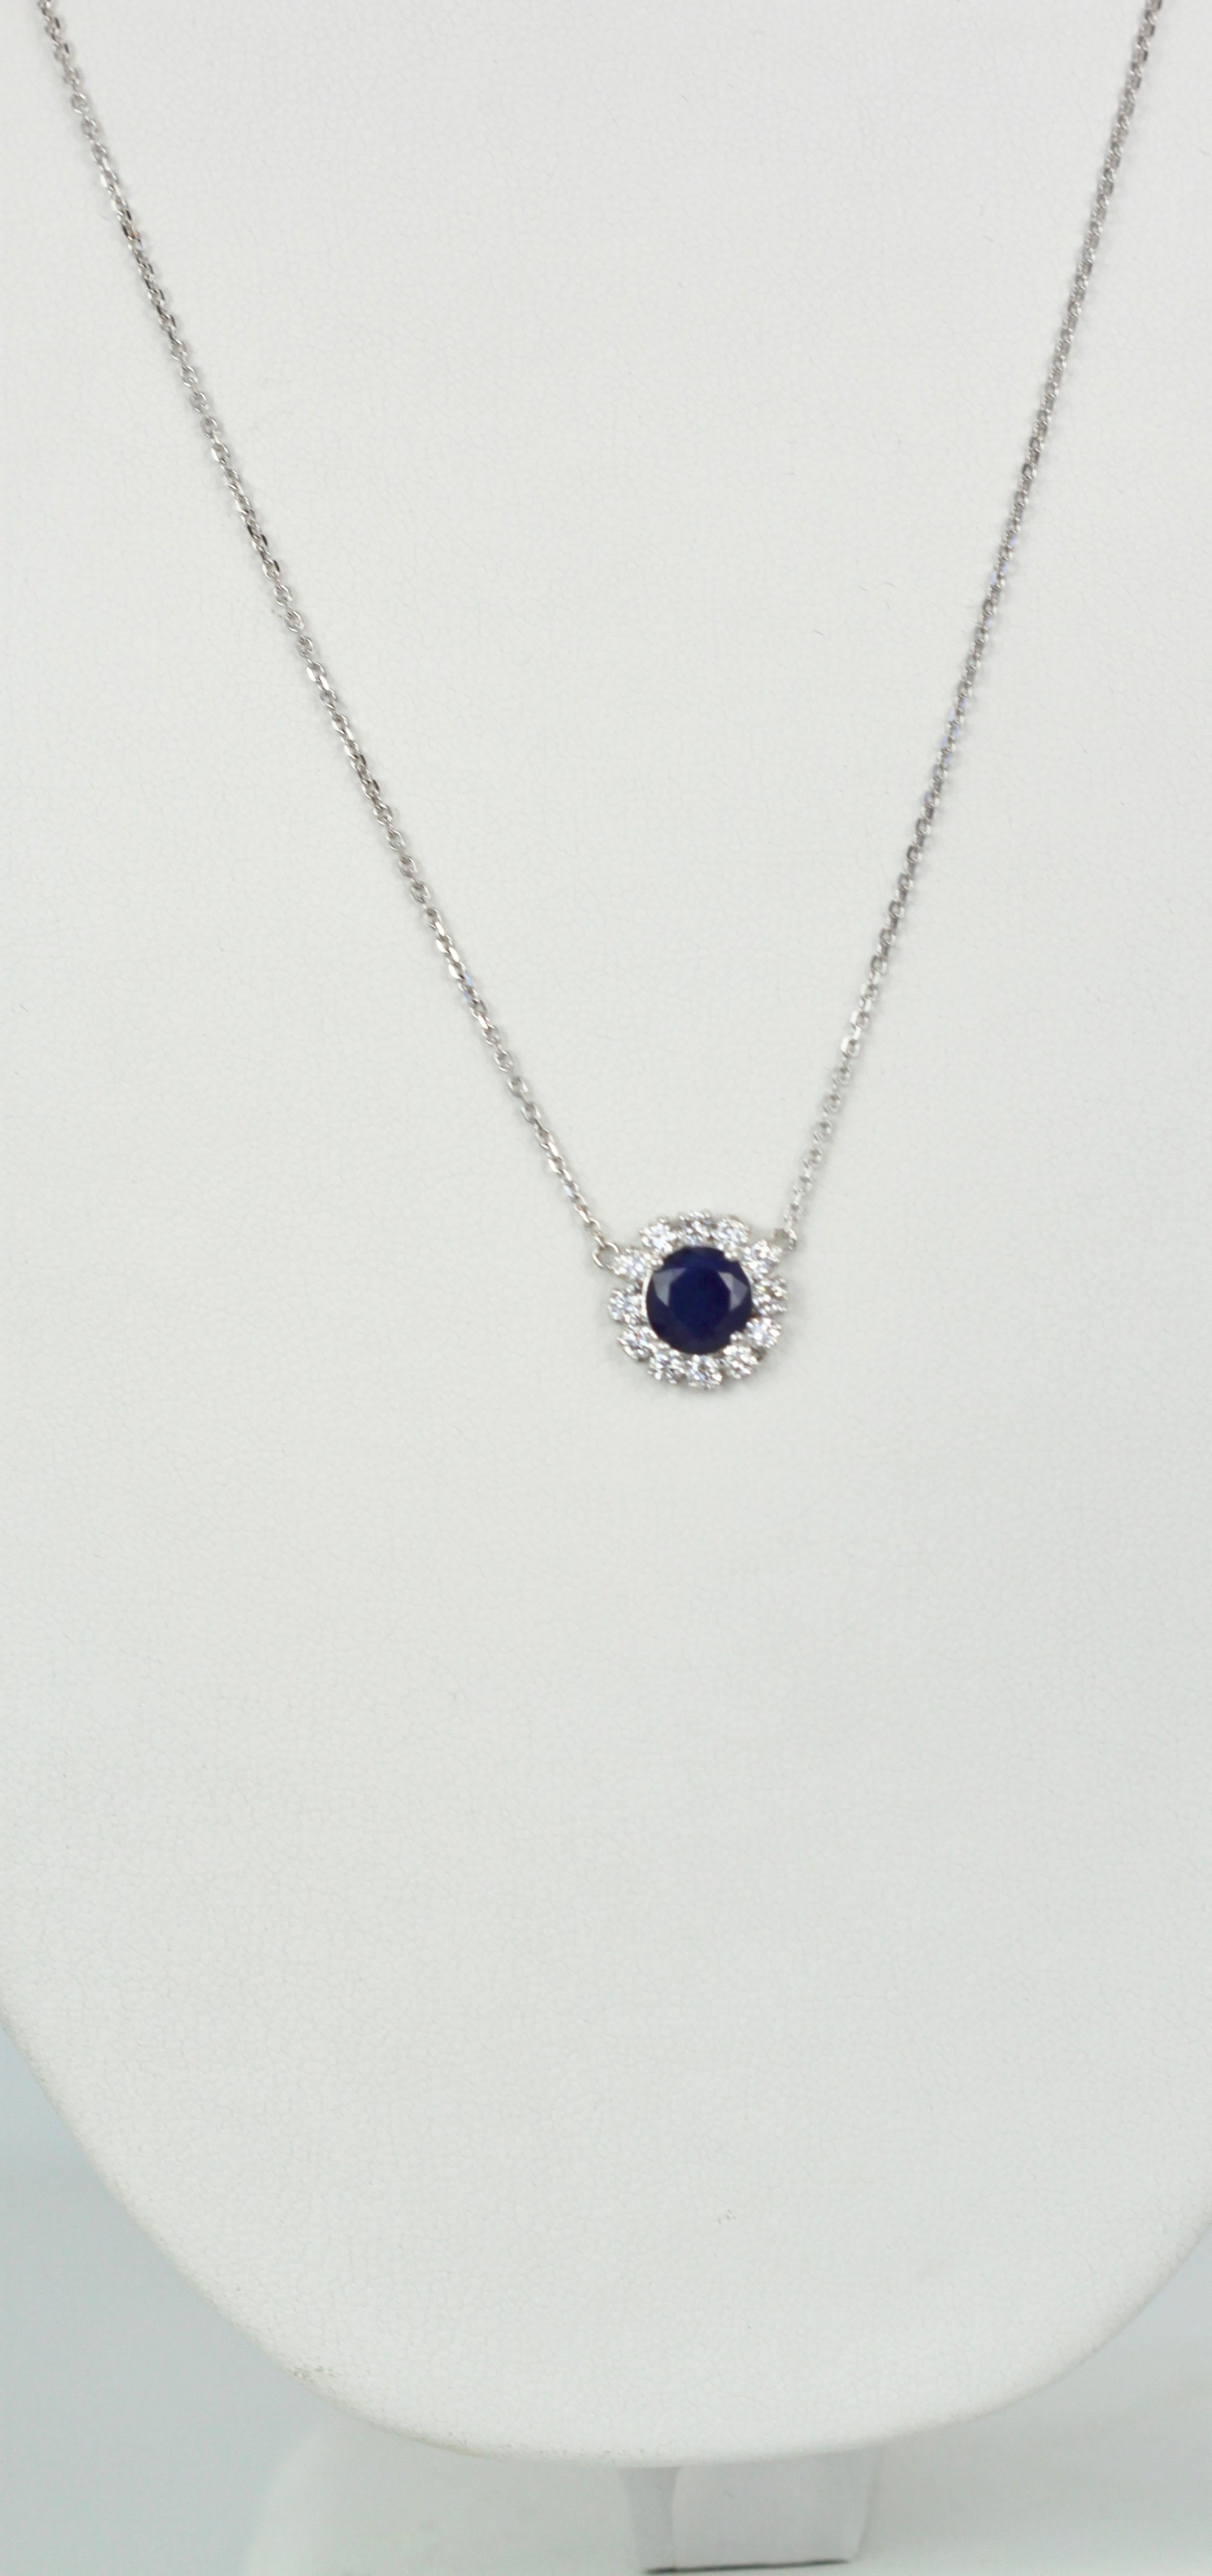 Blue Sapphire Pendant Necklace with Diamond Surround 2